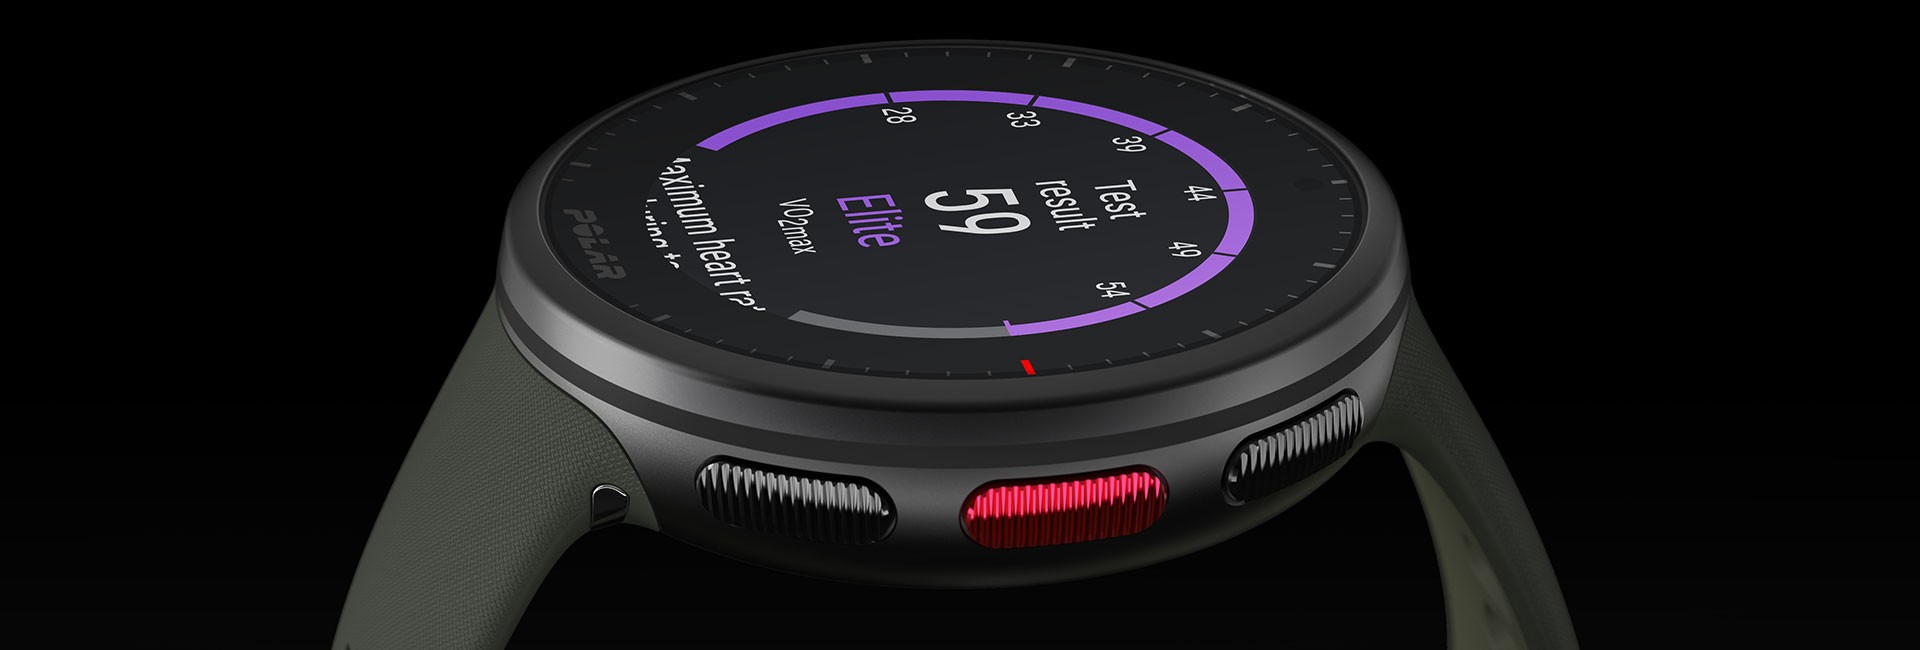 Review: Polar Vantage V2 smartwatch sleep tracker